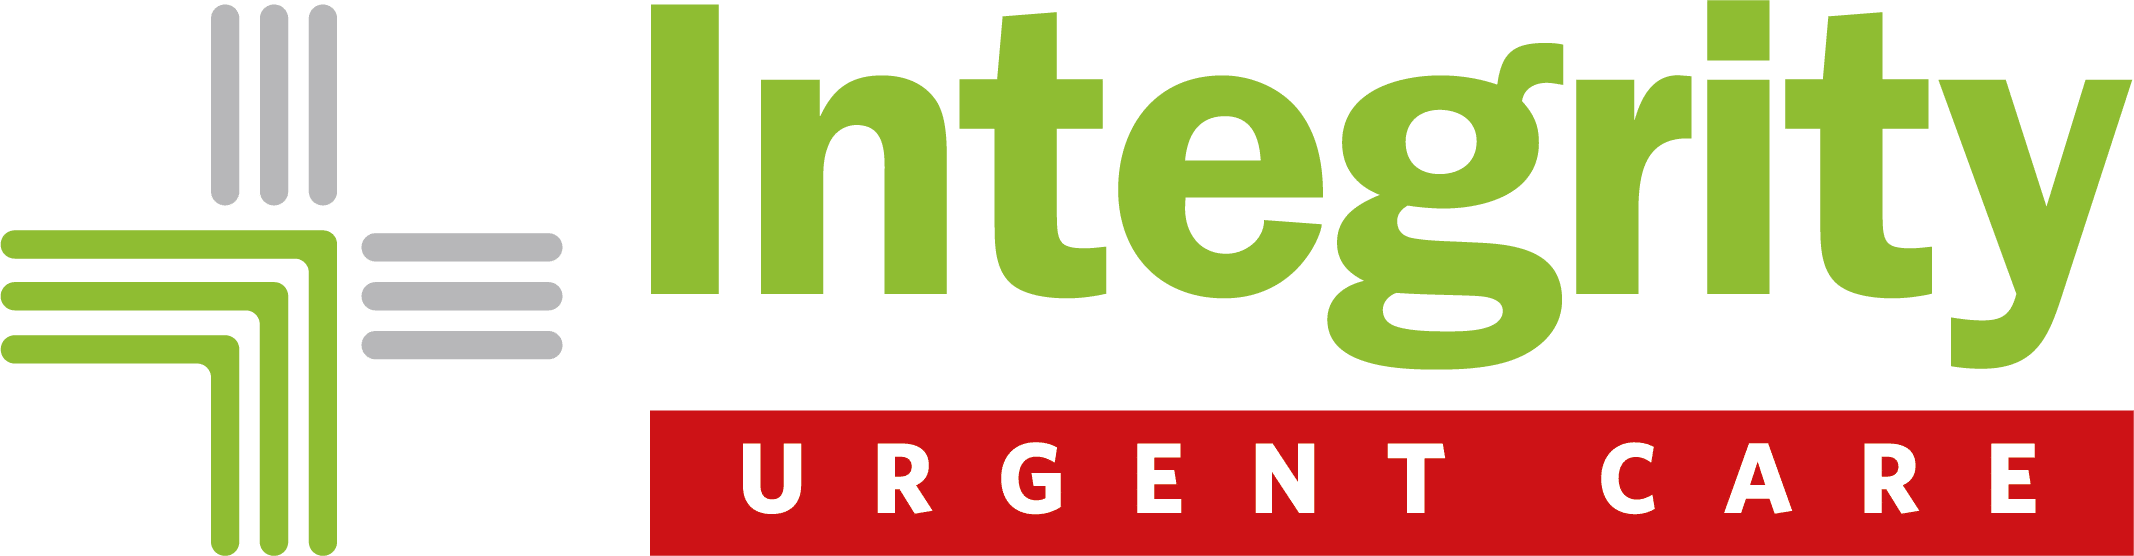 integrity urgent care logo